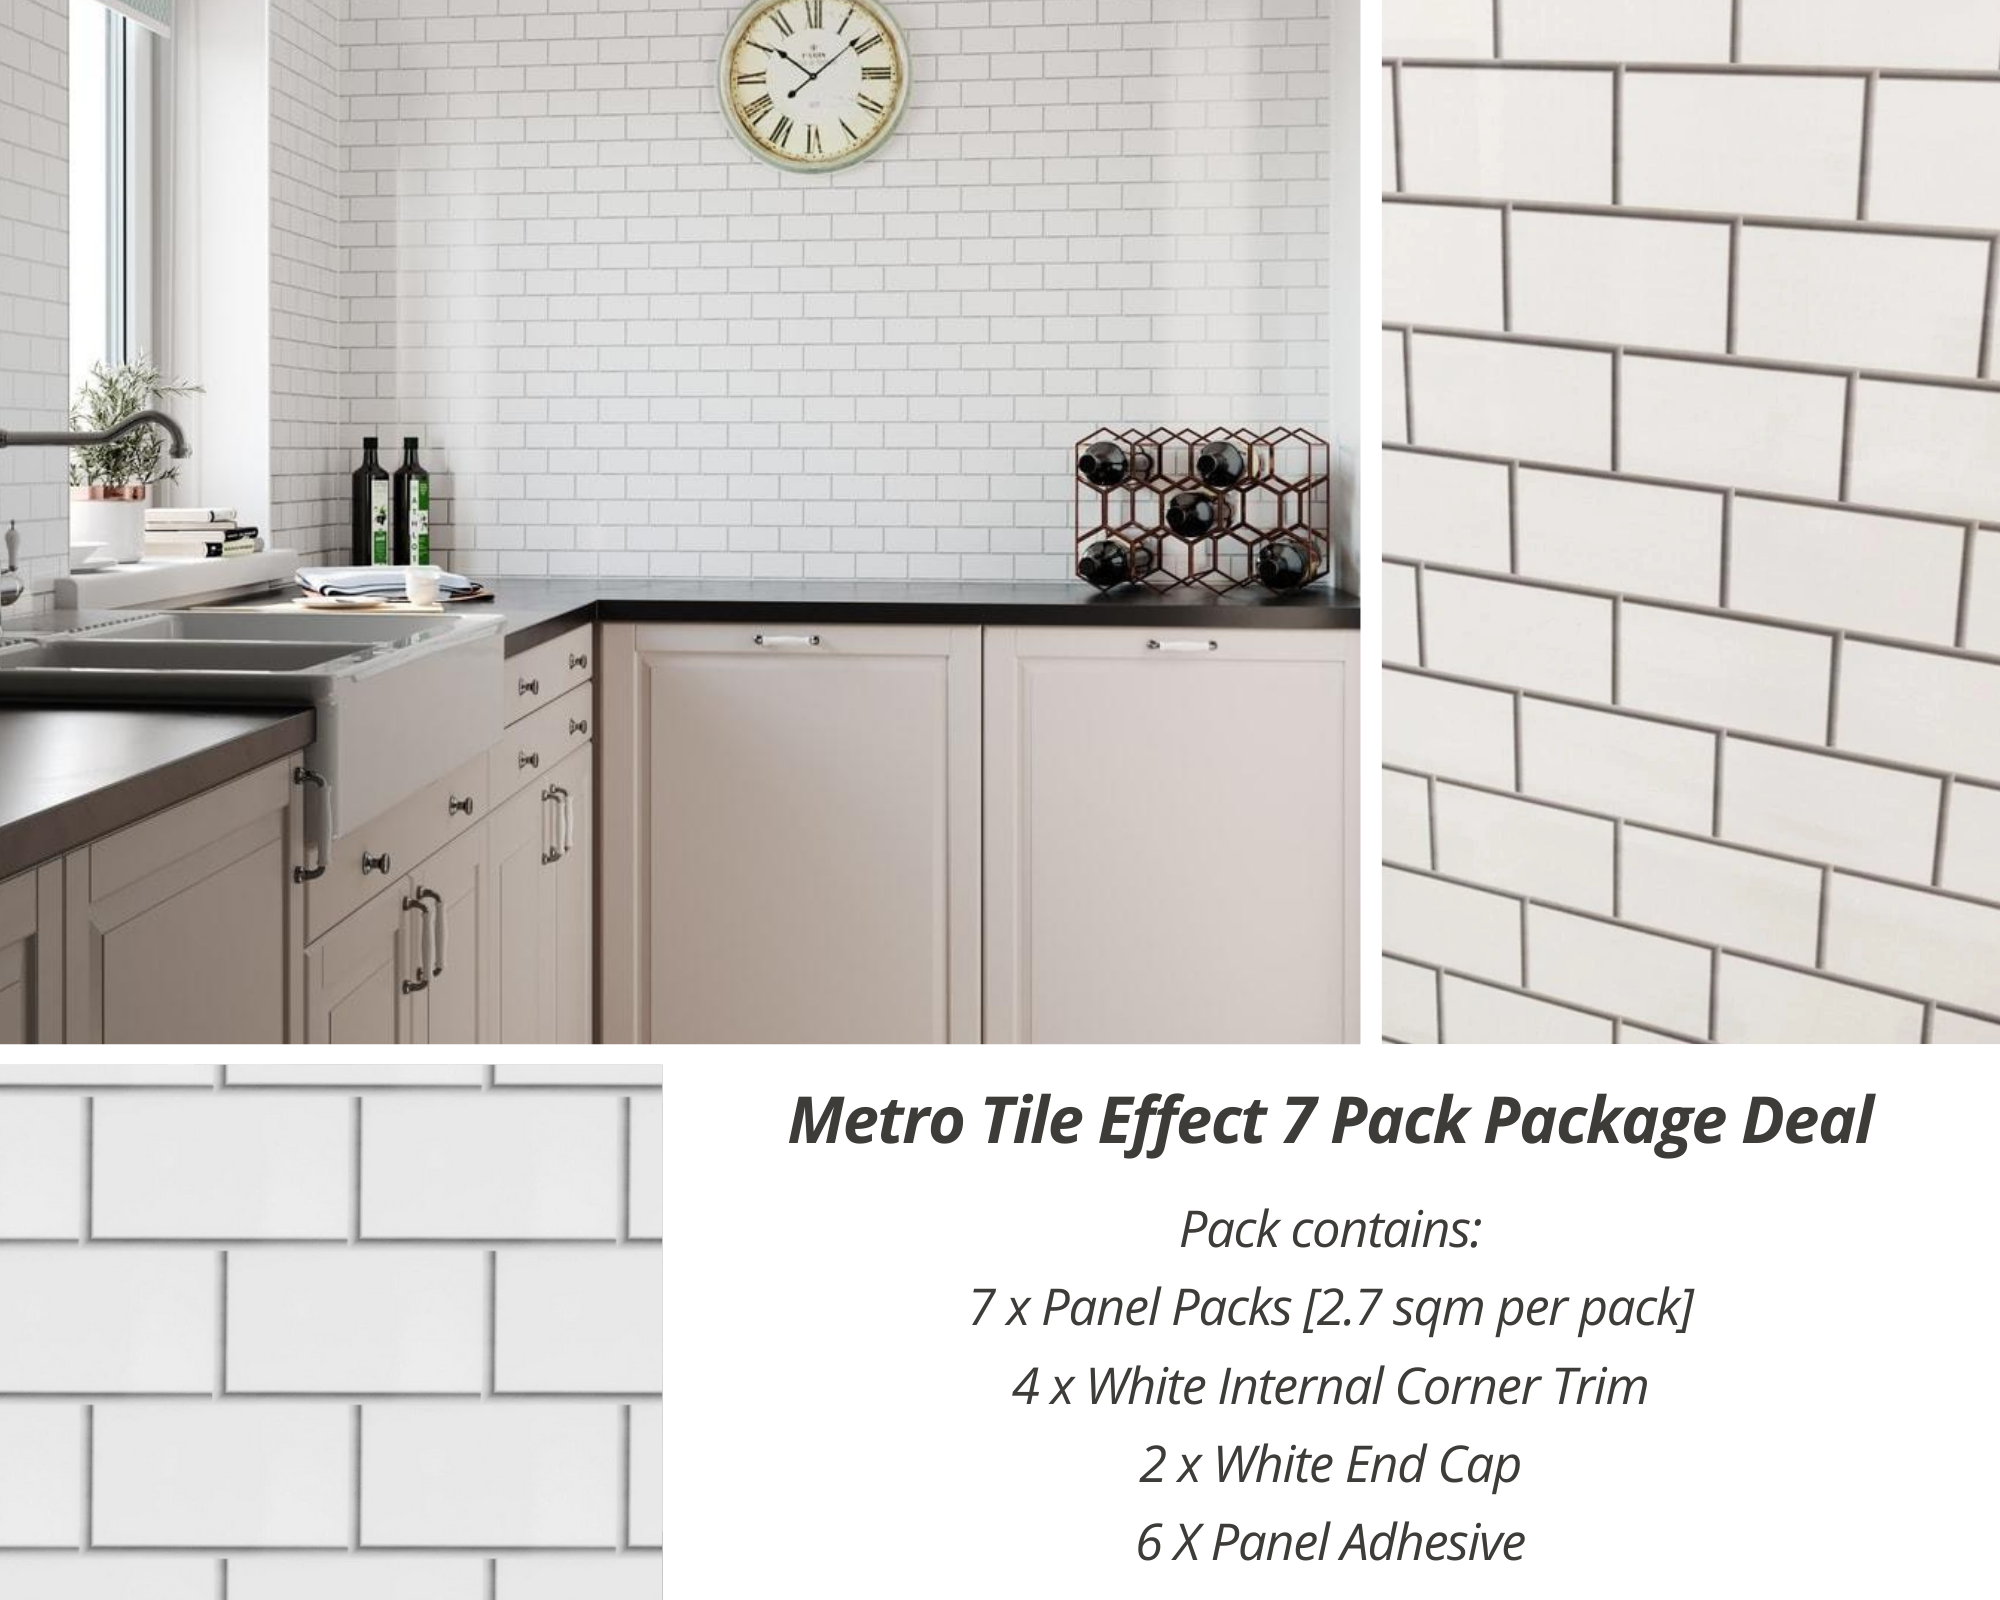 Metro Tile Effect 7 Pack Package Deal